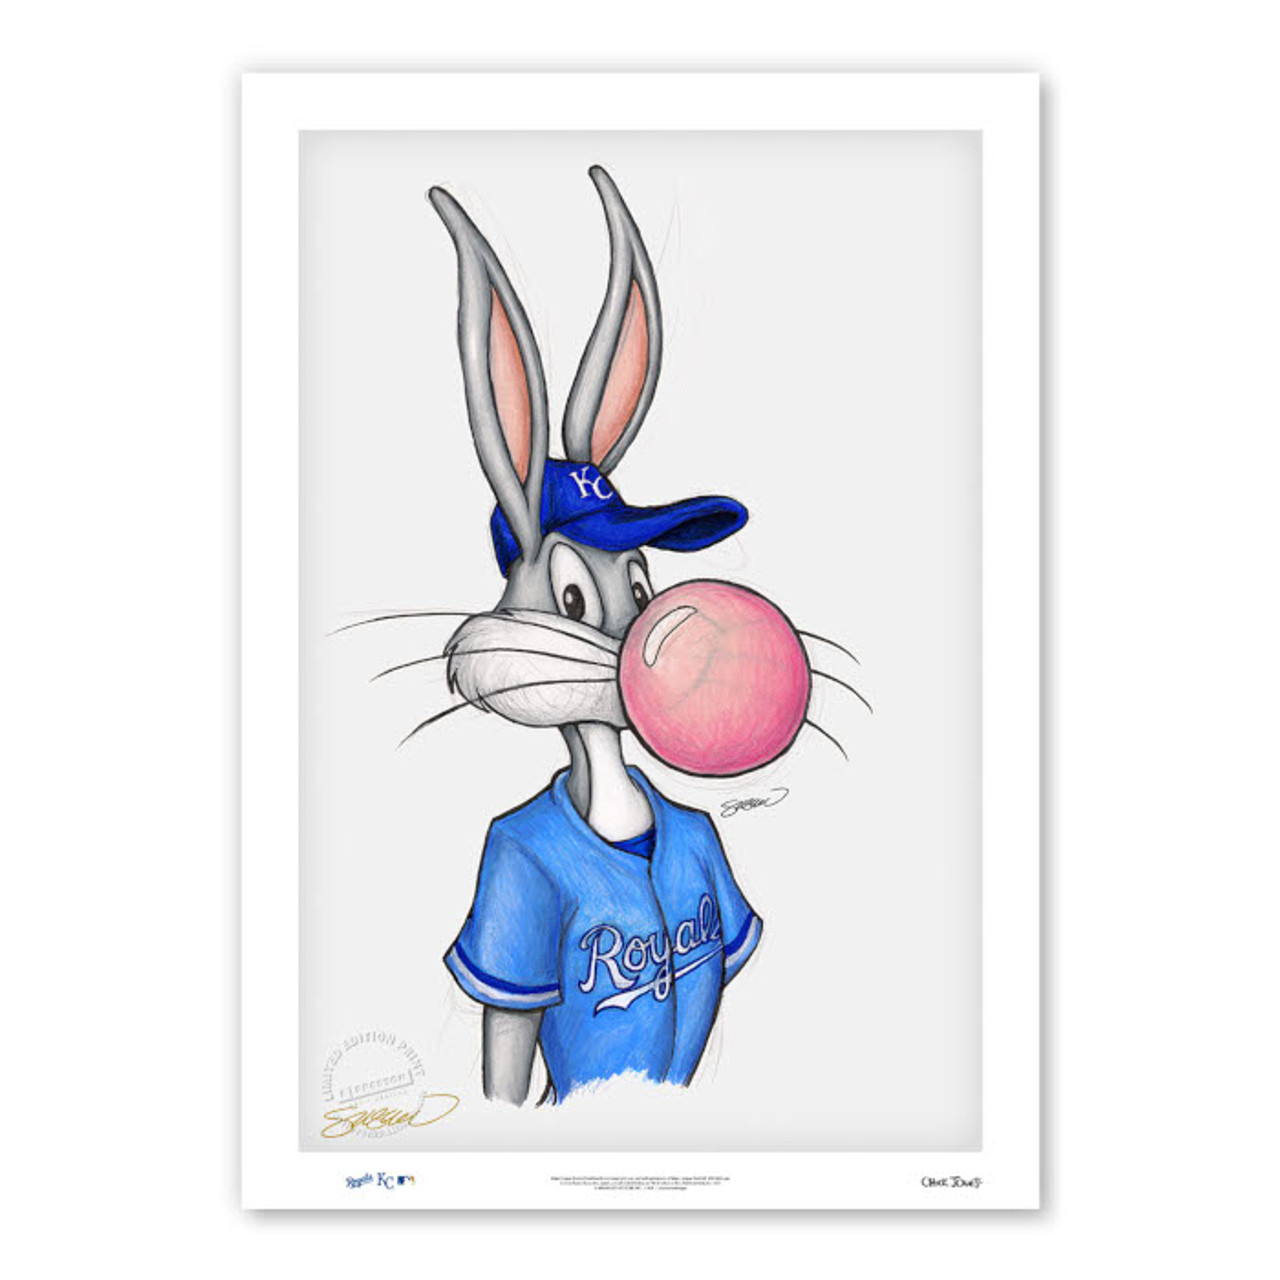 Kansas City Royals Bugs Bunny Baseball Jersey -  Worldwide  Shipping